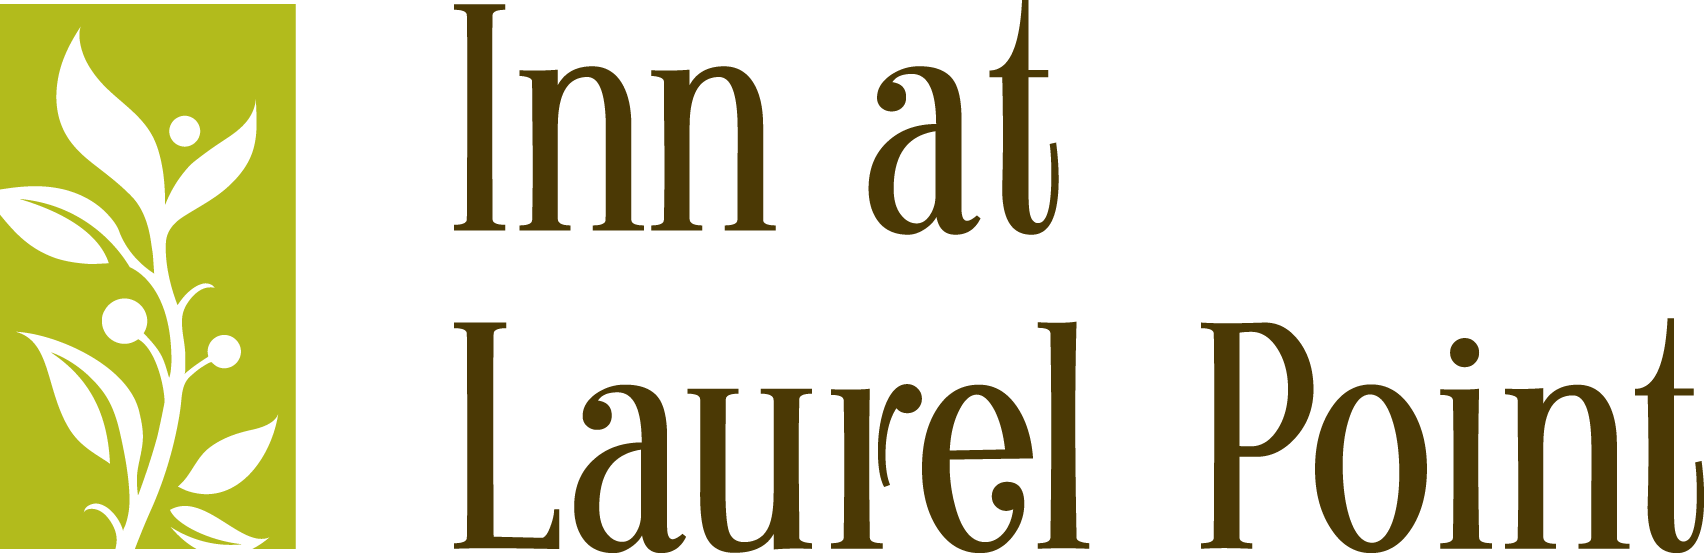 inn-at-laurel-point-logo.png